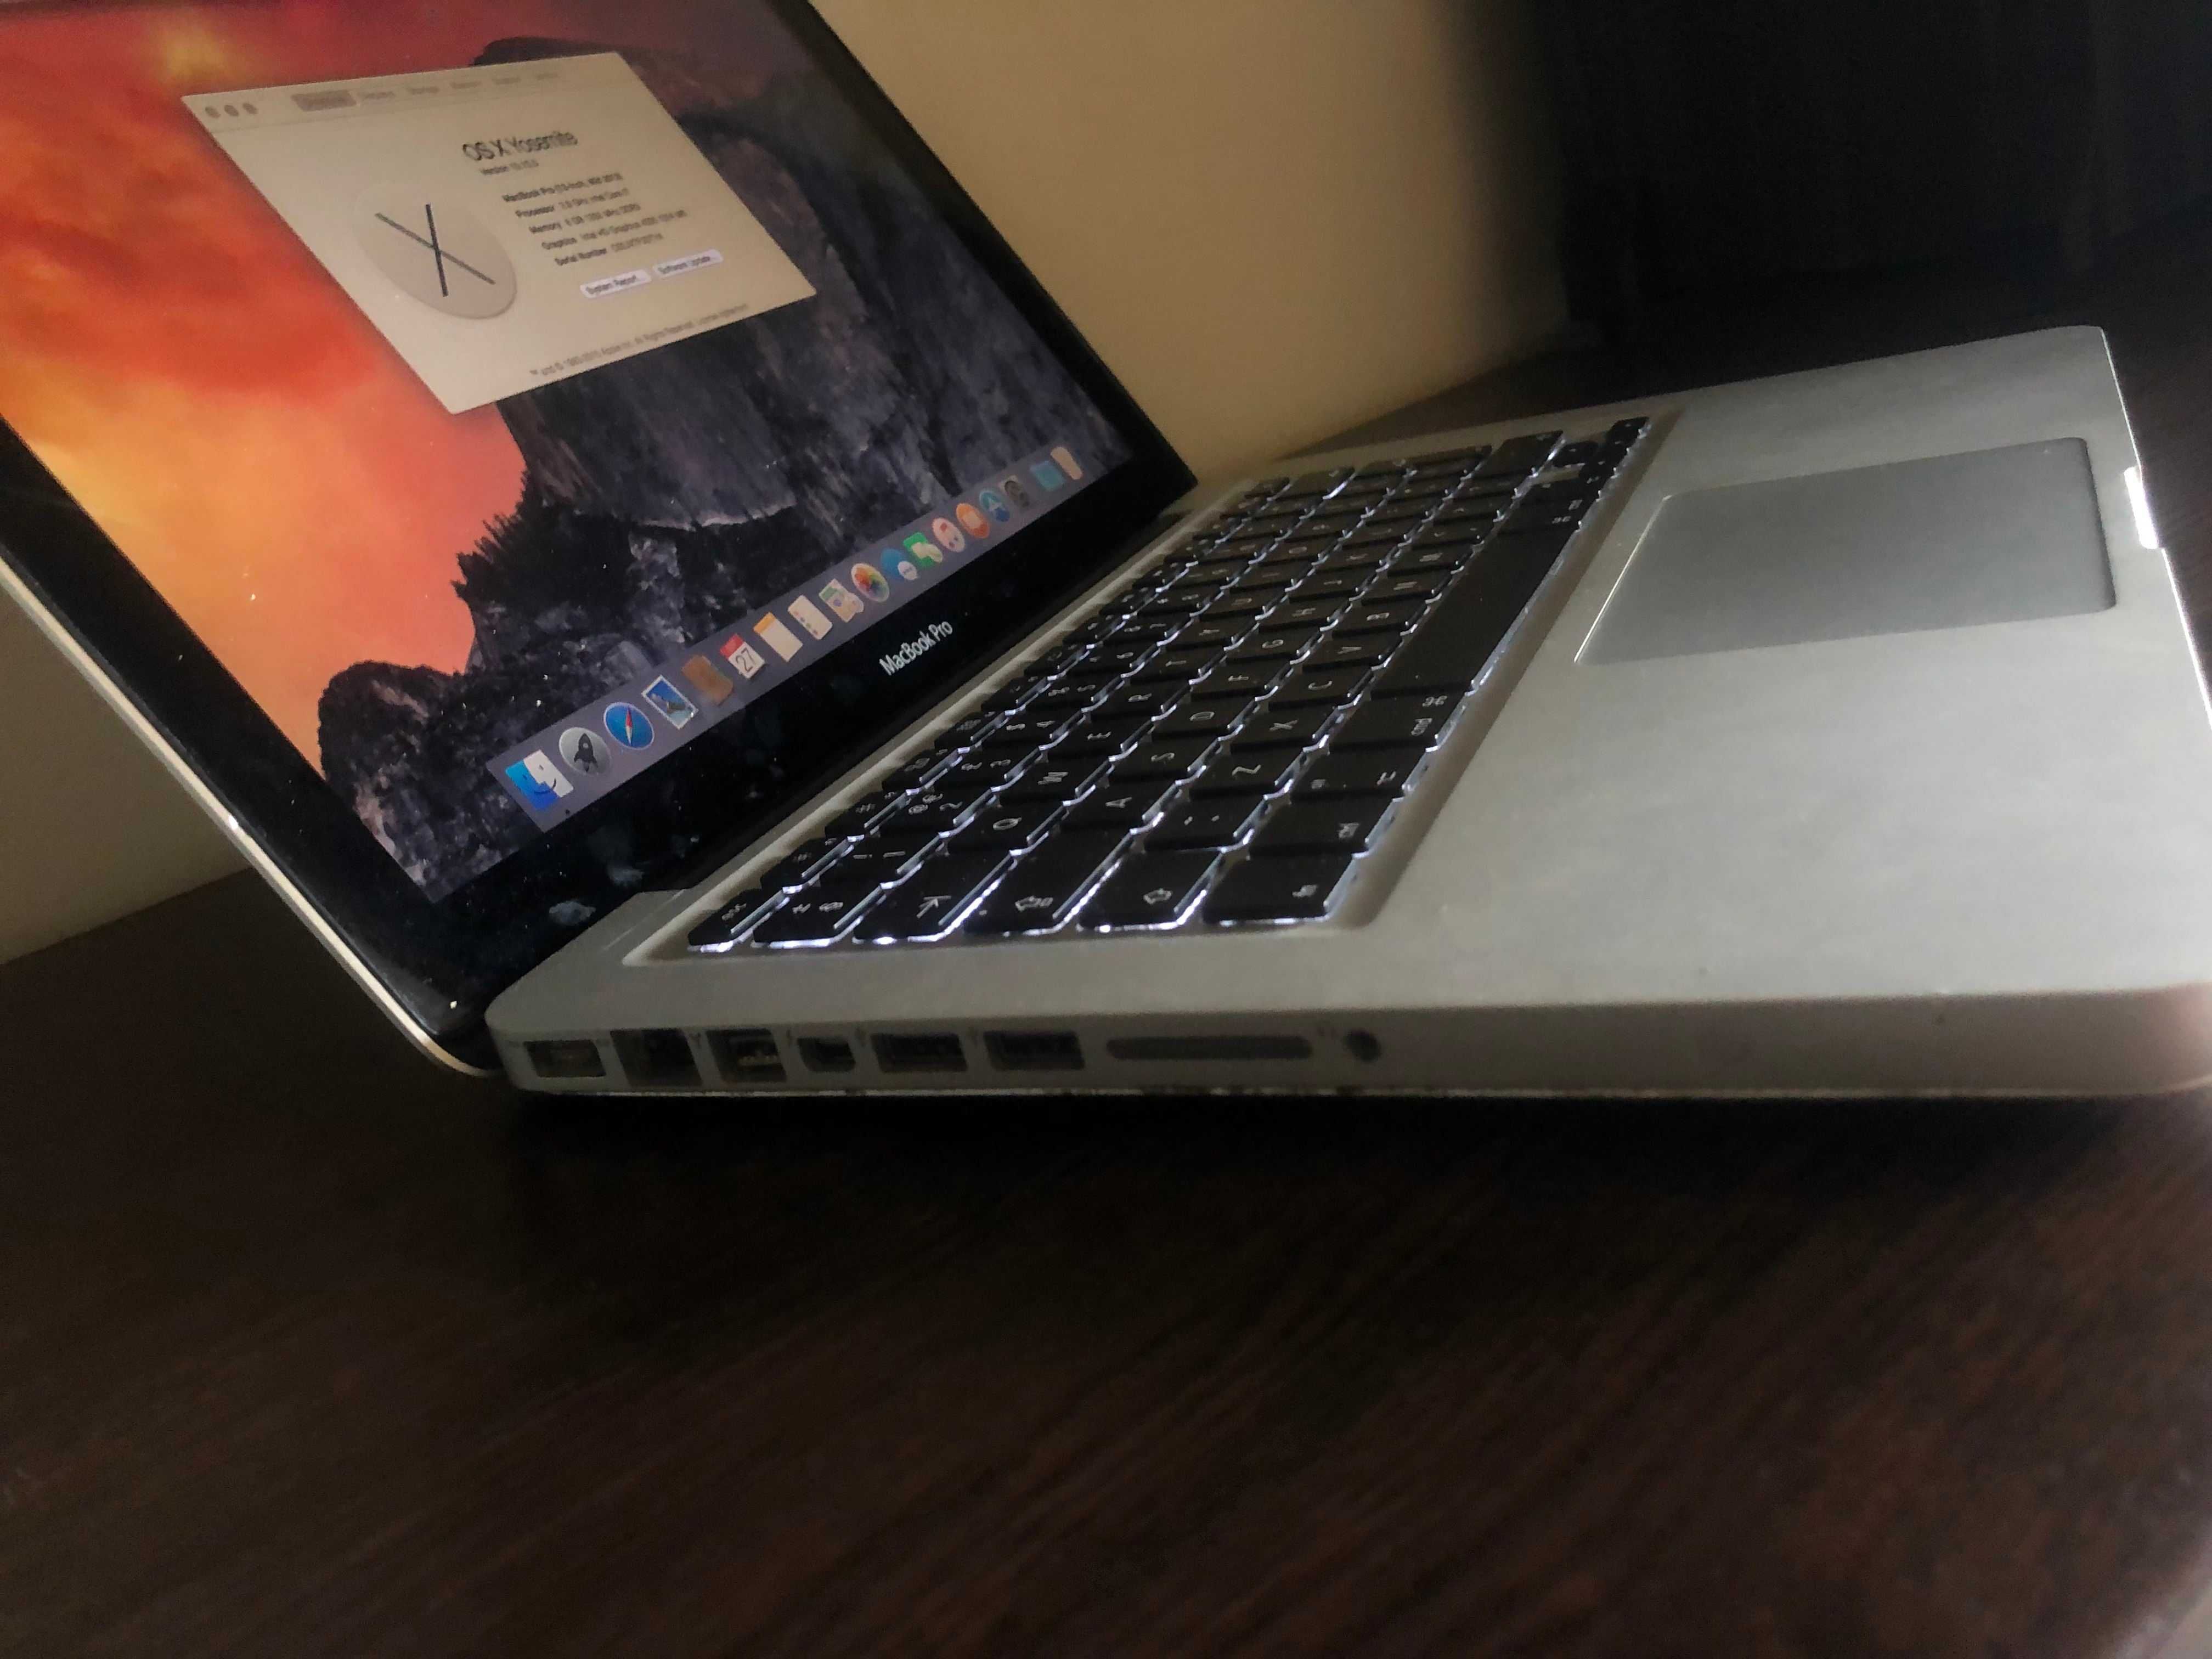 MacBook Pro I7 (13-inch, Mid 2012)